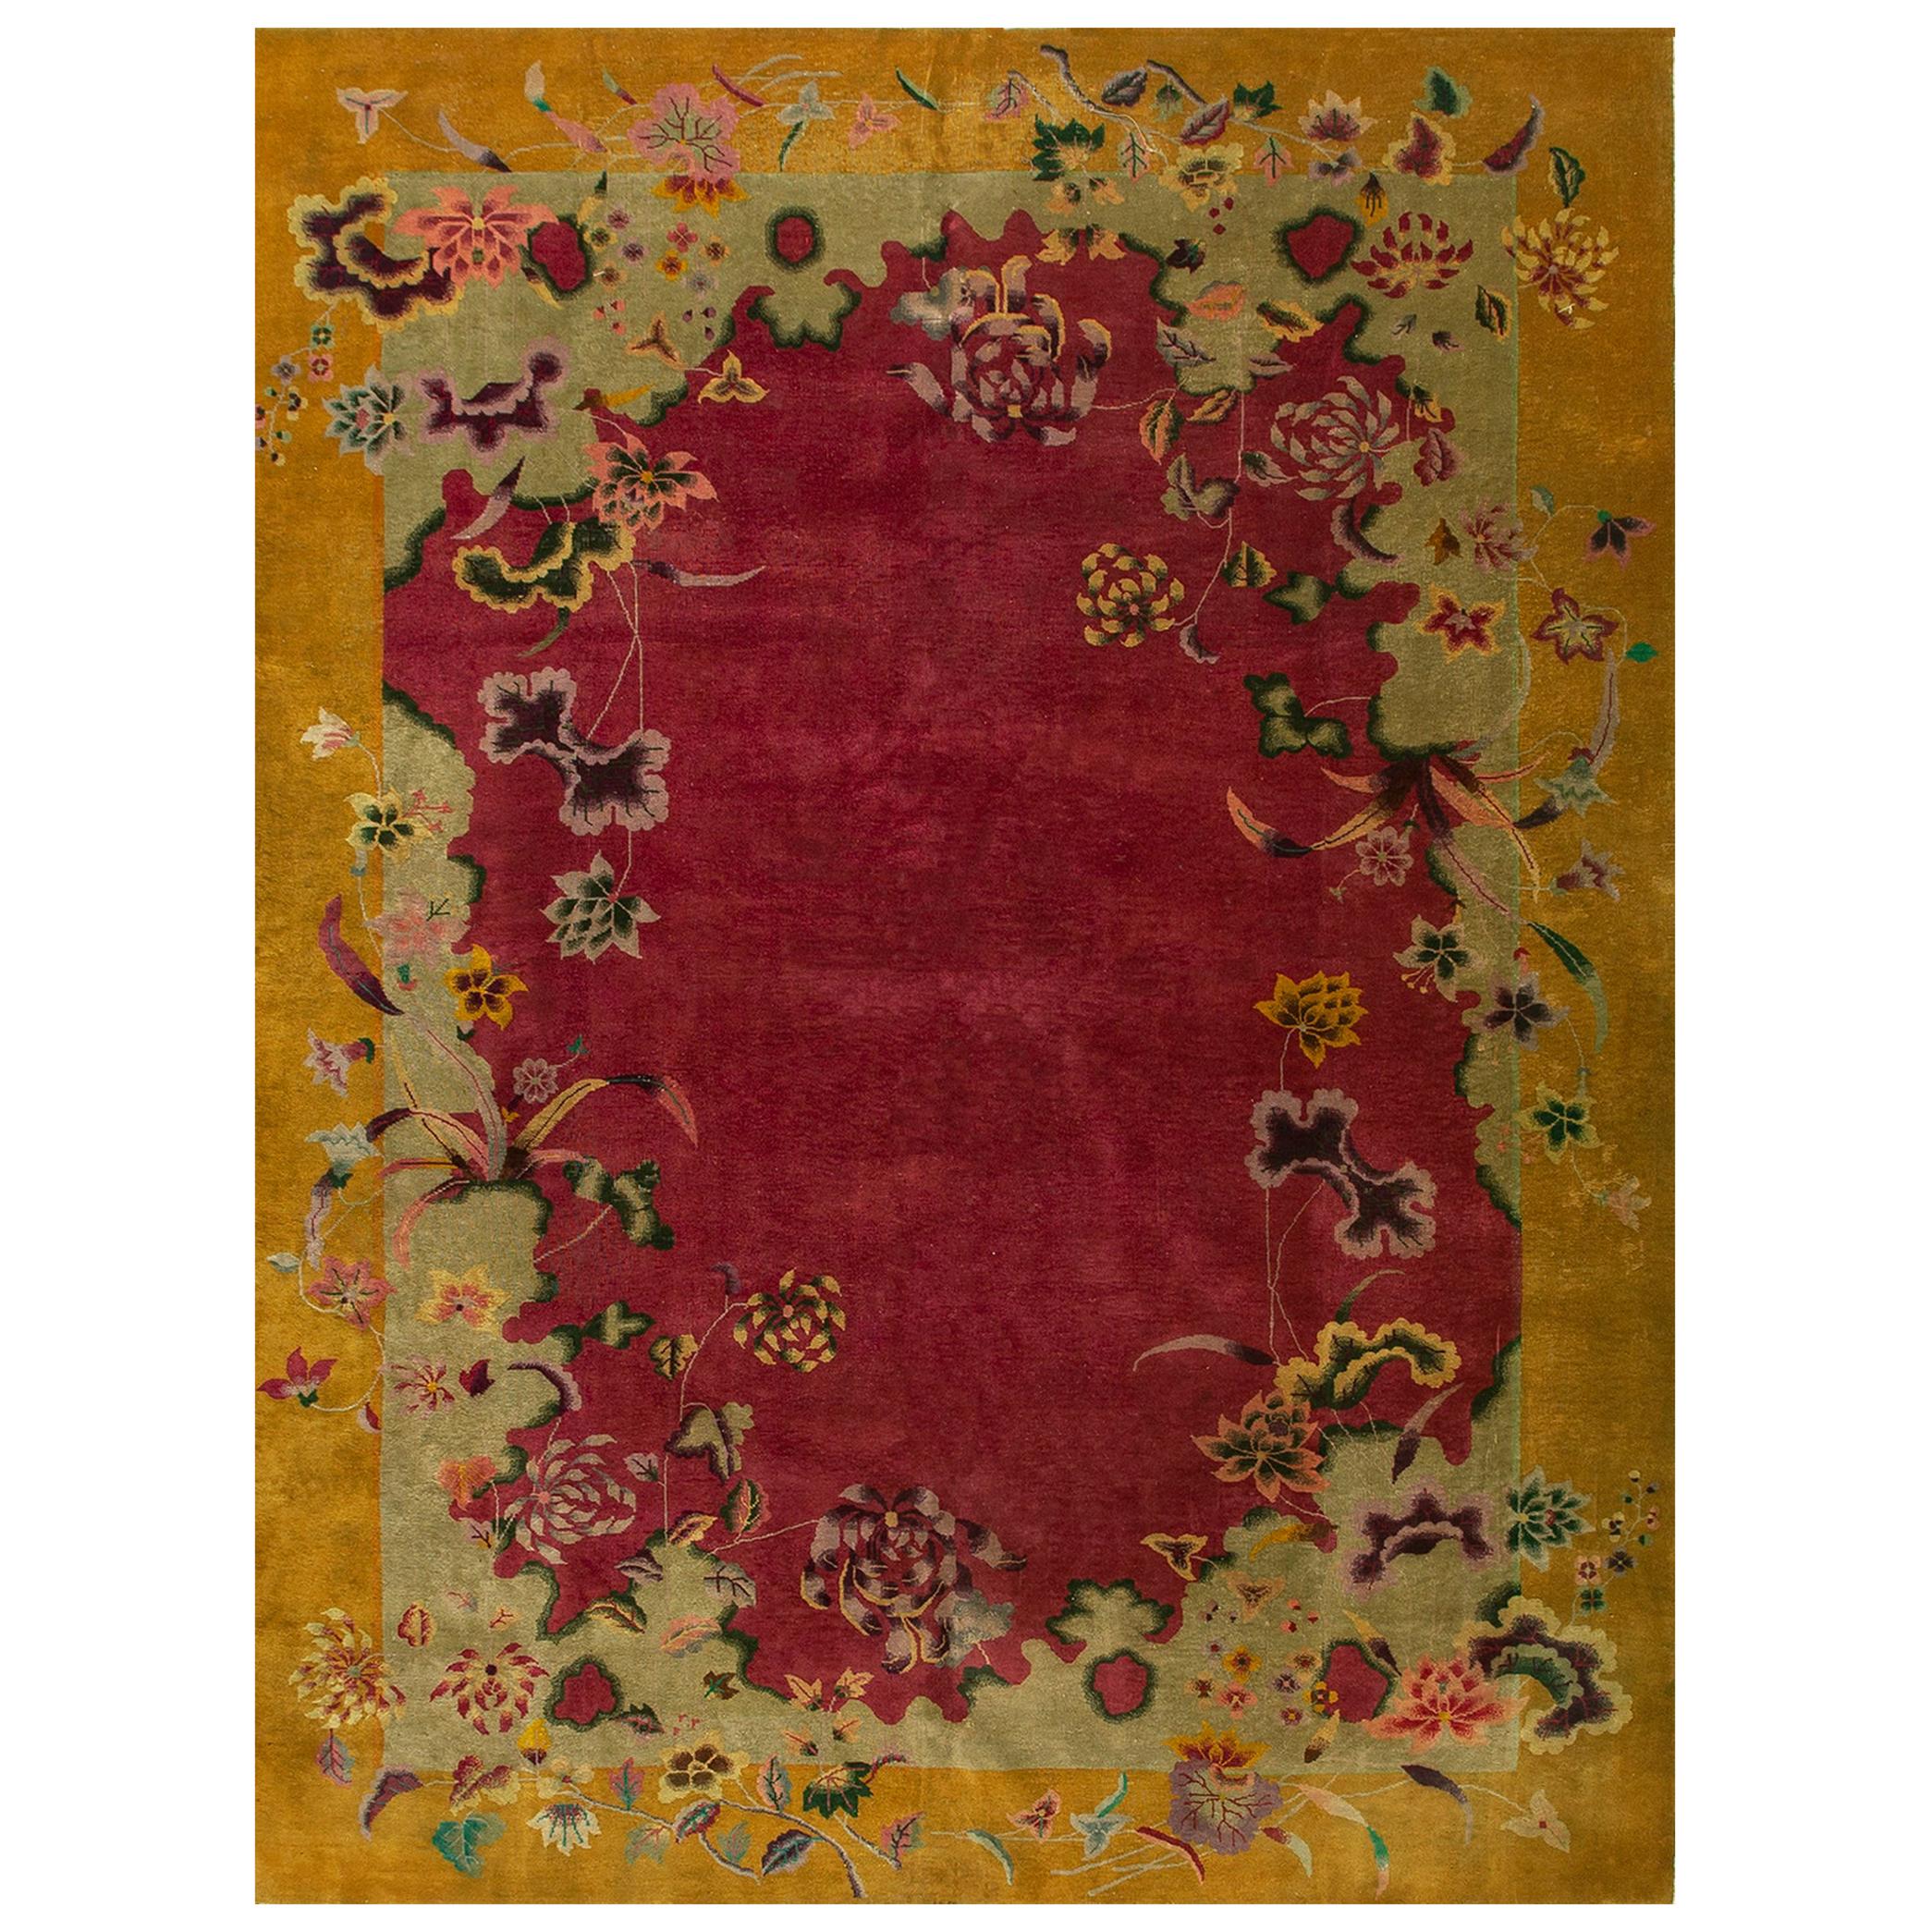 1920s Chinese Art Deco Carpet ( 8'9" x 11'1" - 266 x 337 cm ) For Sale